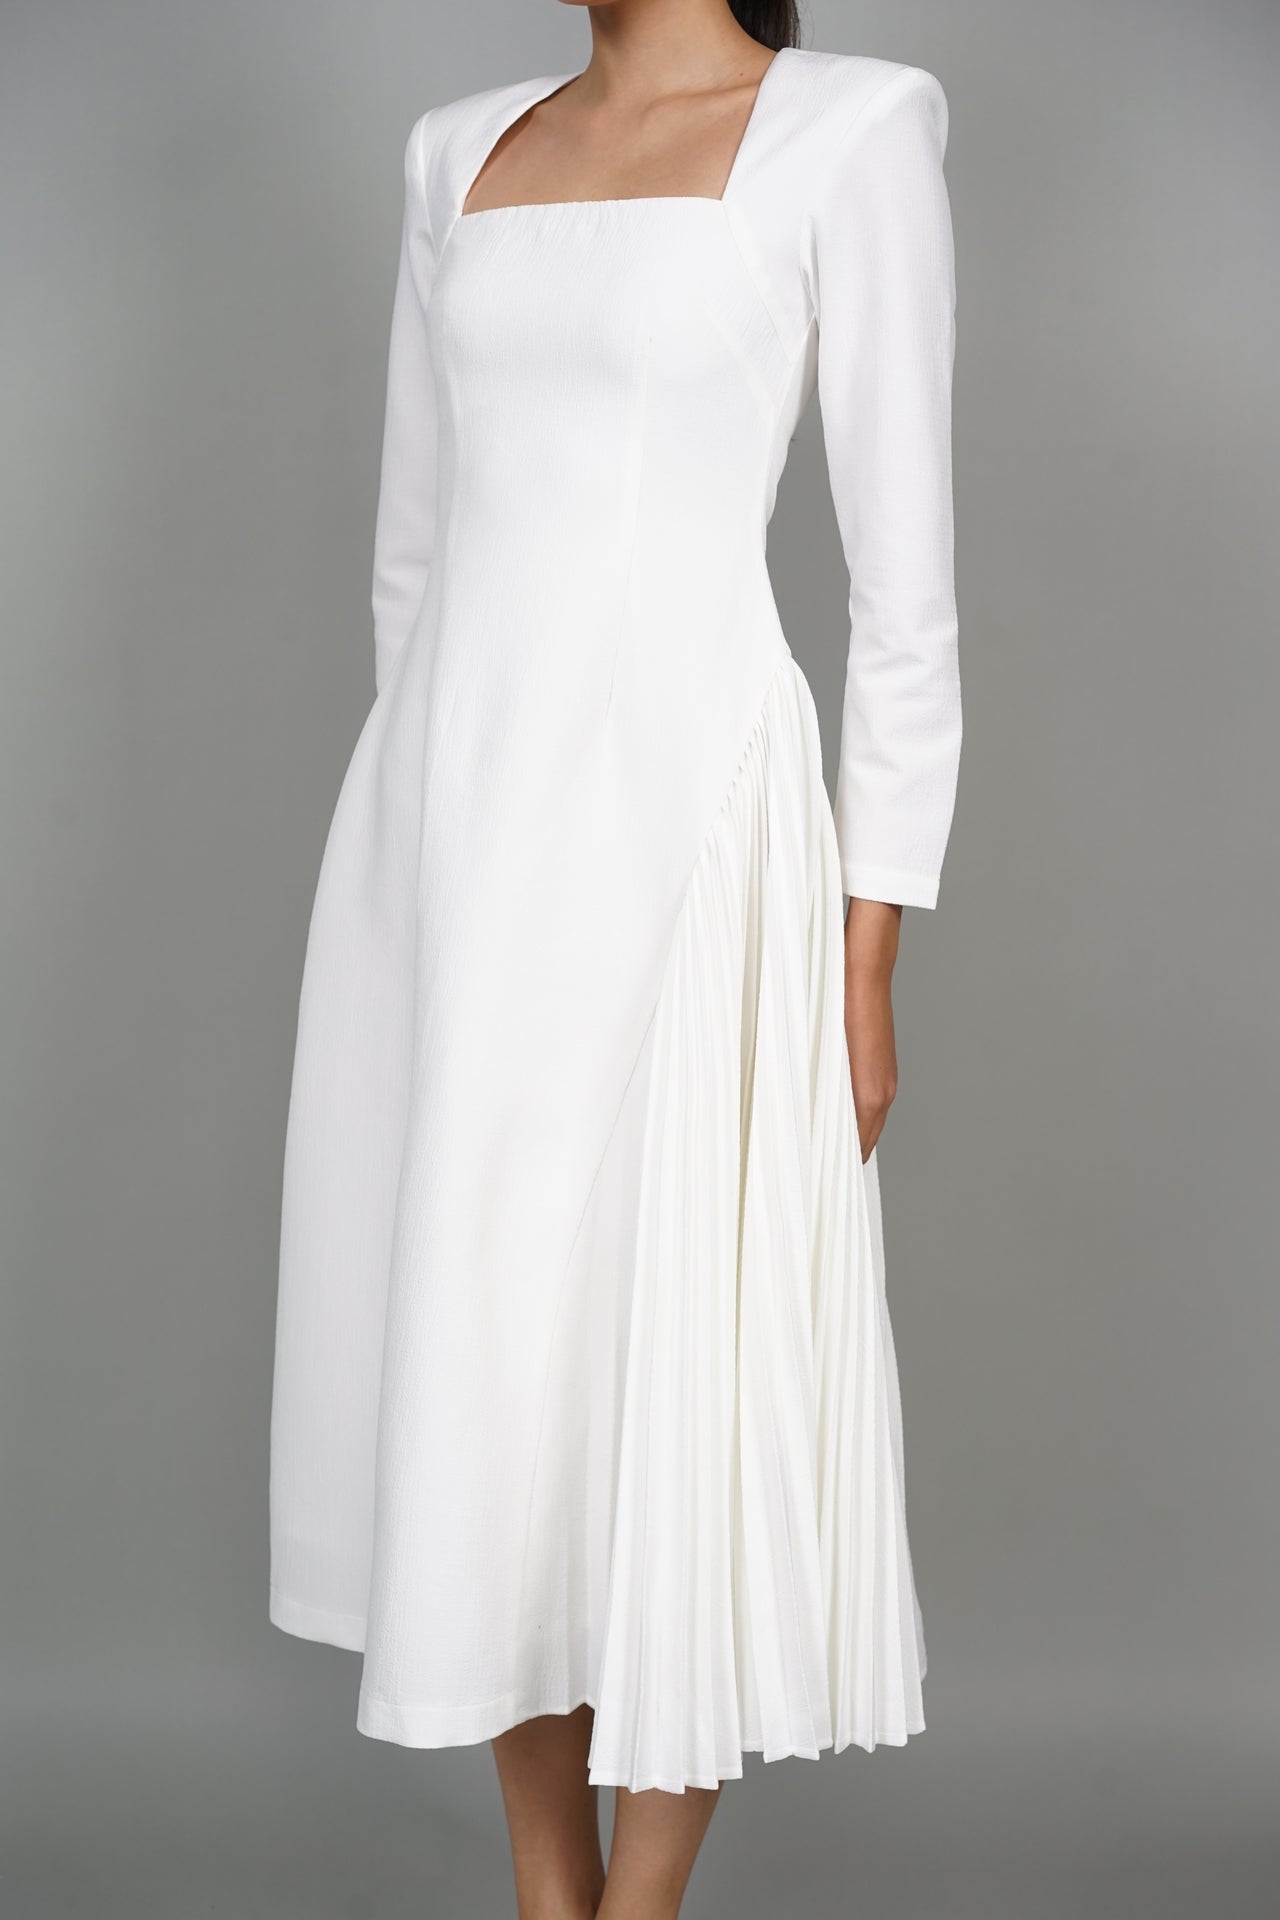 Tenzi Midi Dress in White